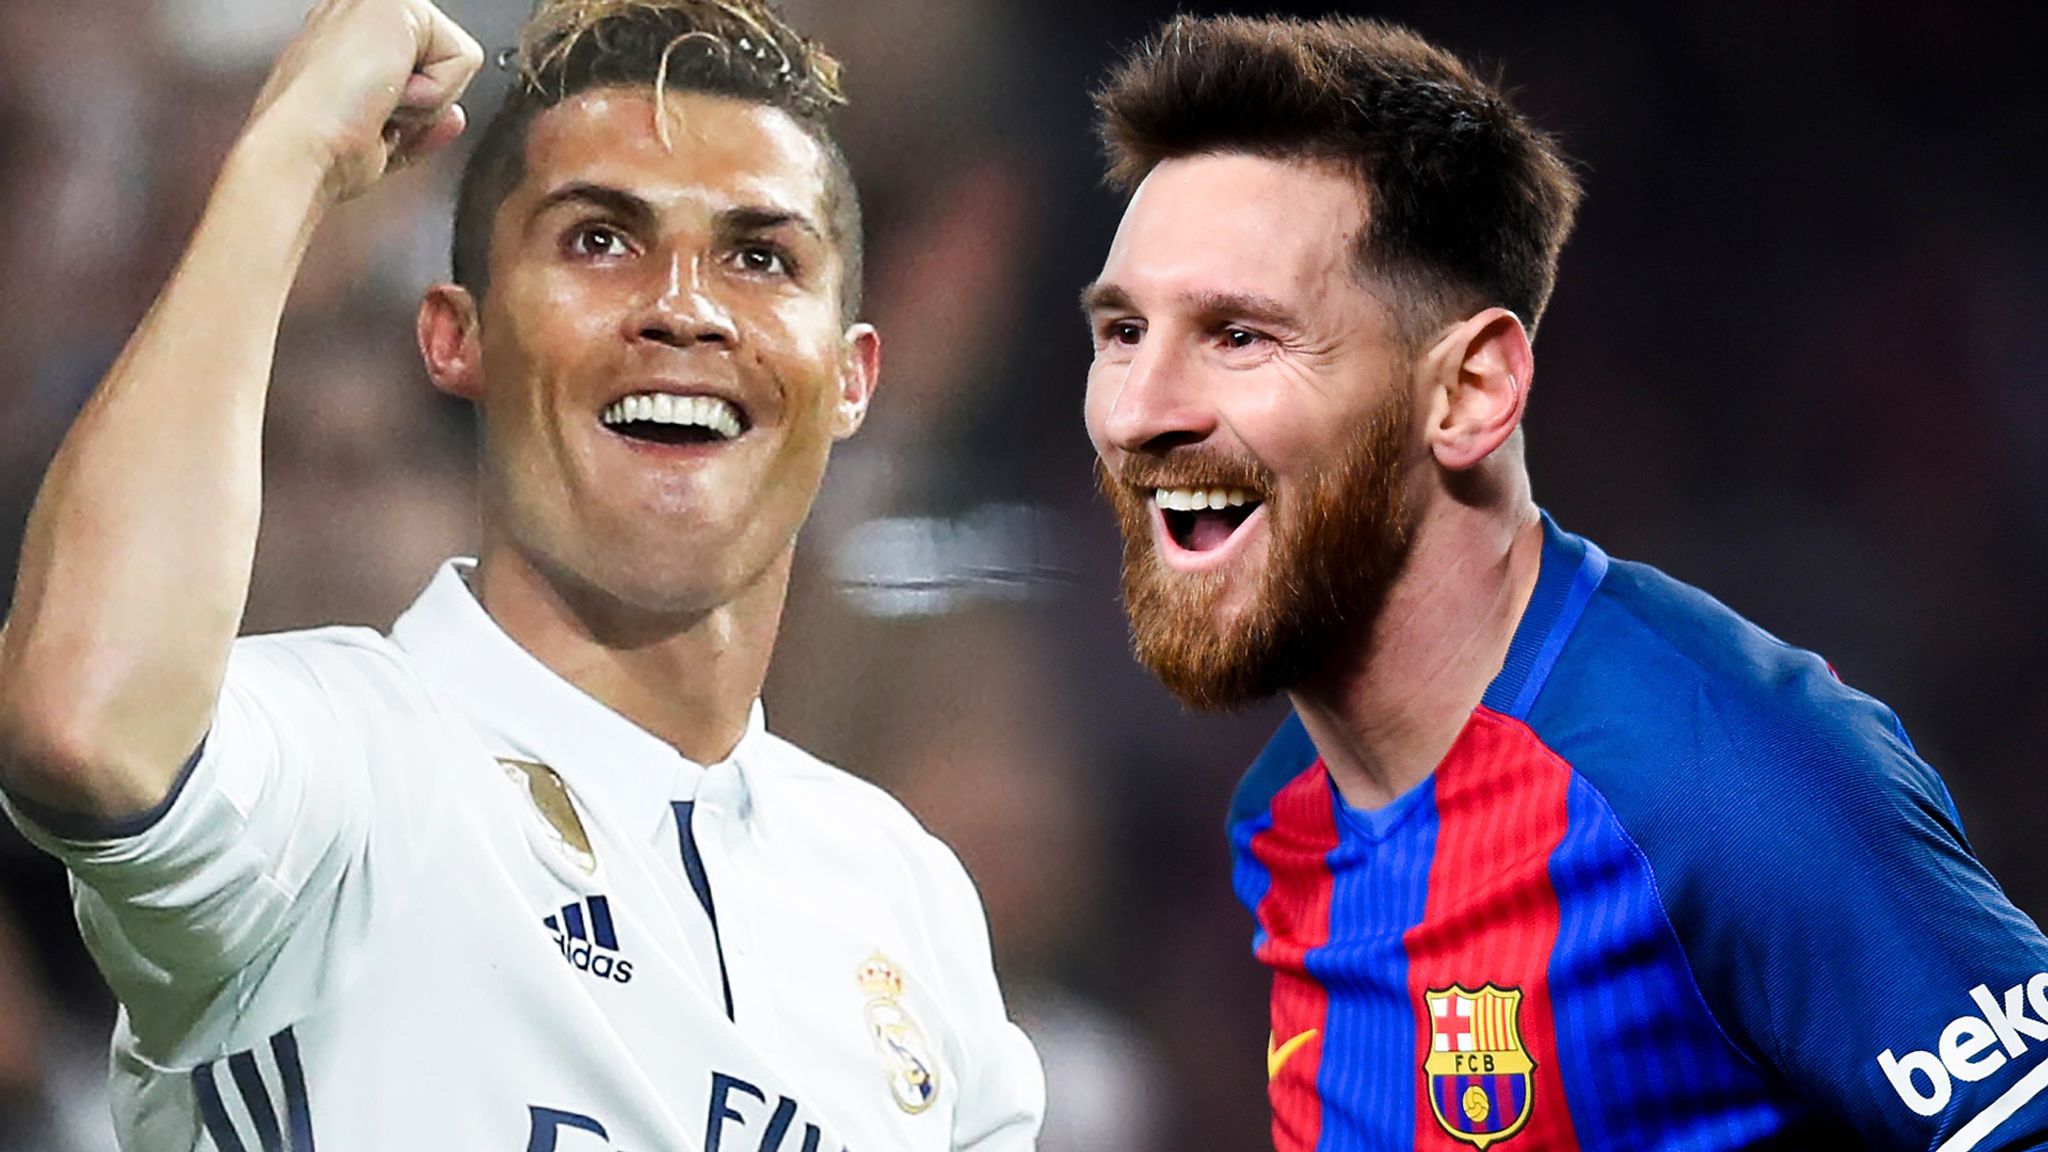 Cristiano Ronaldo v Lionel Messi Awards, goals and stats compared